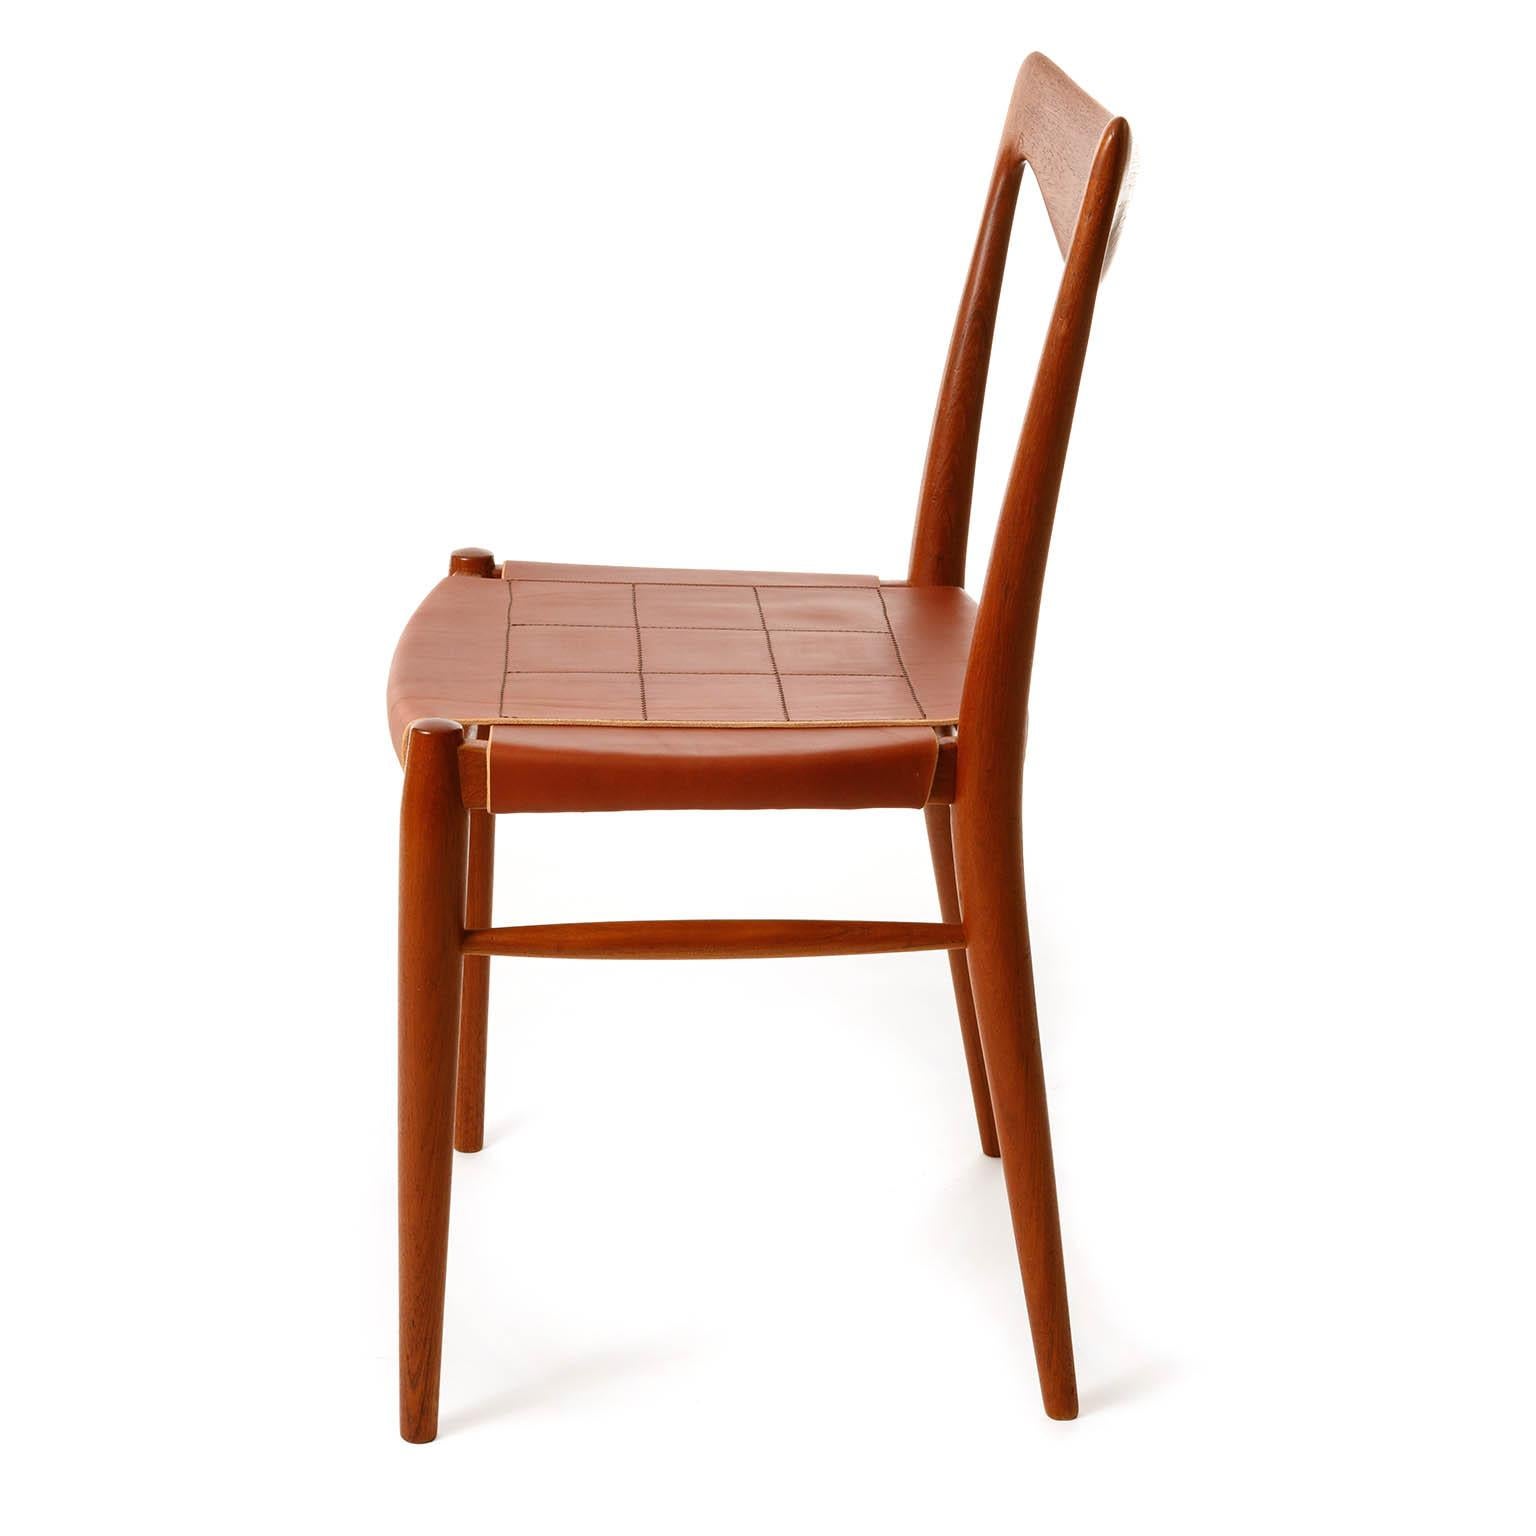 Sechs 'Bambi'-Stühle, Rastad & Relling für Gustav Bahus, cognacfarbenes Leder und Teakholz, 1950er Jahre im Angebot 1